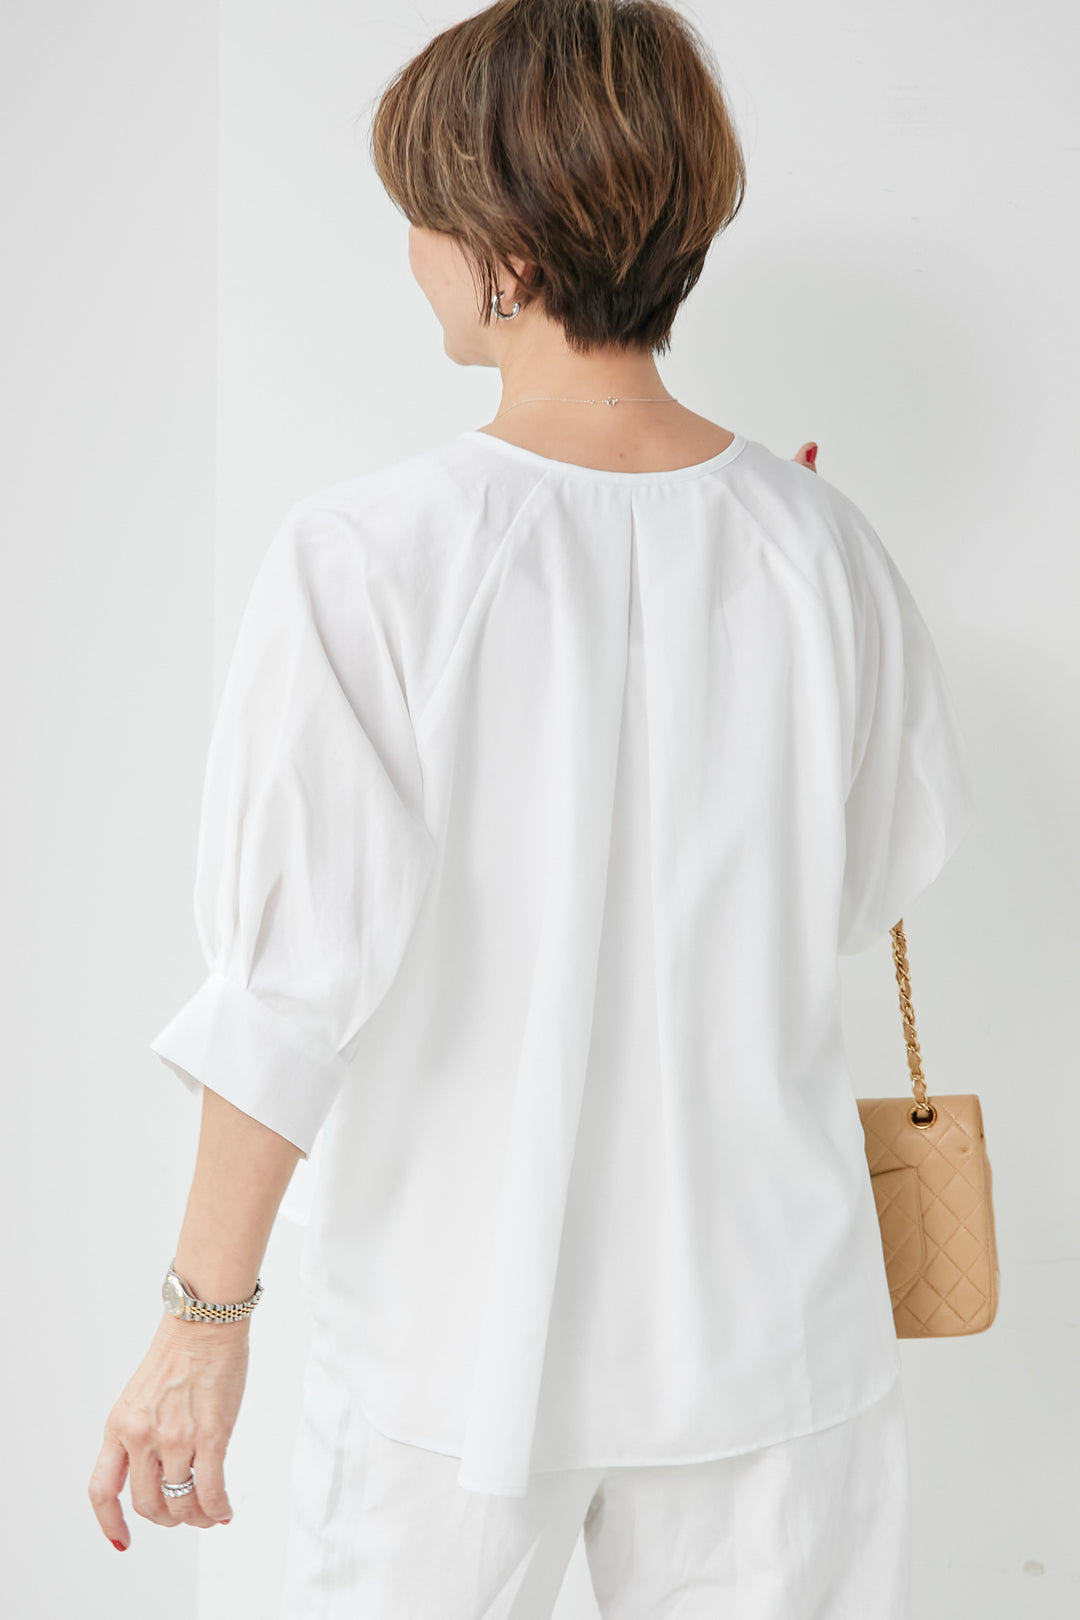 Linen-look circle neck blouse